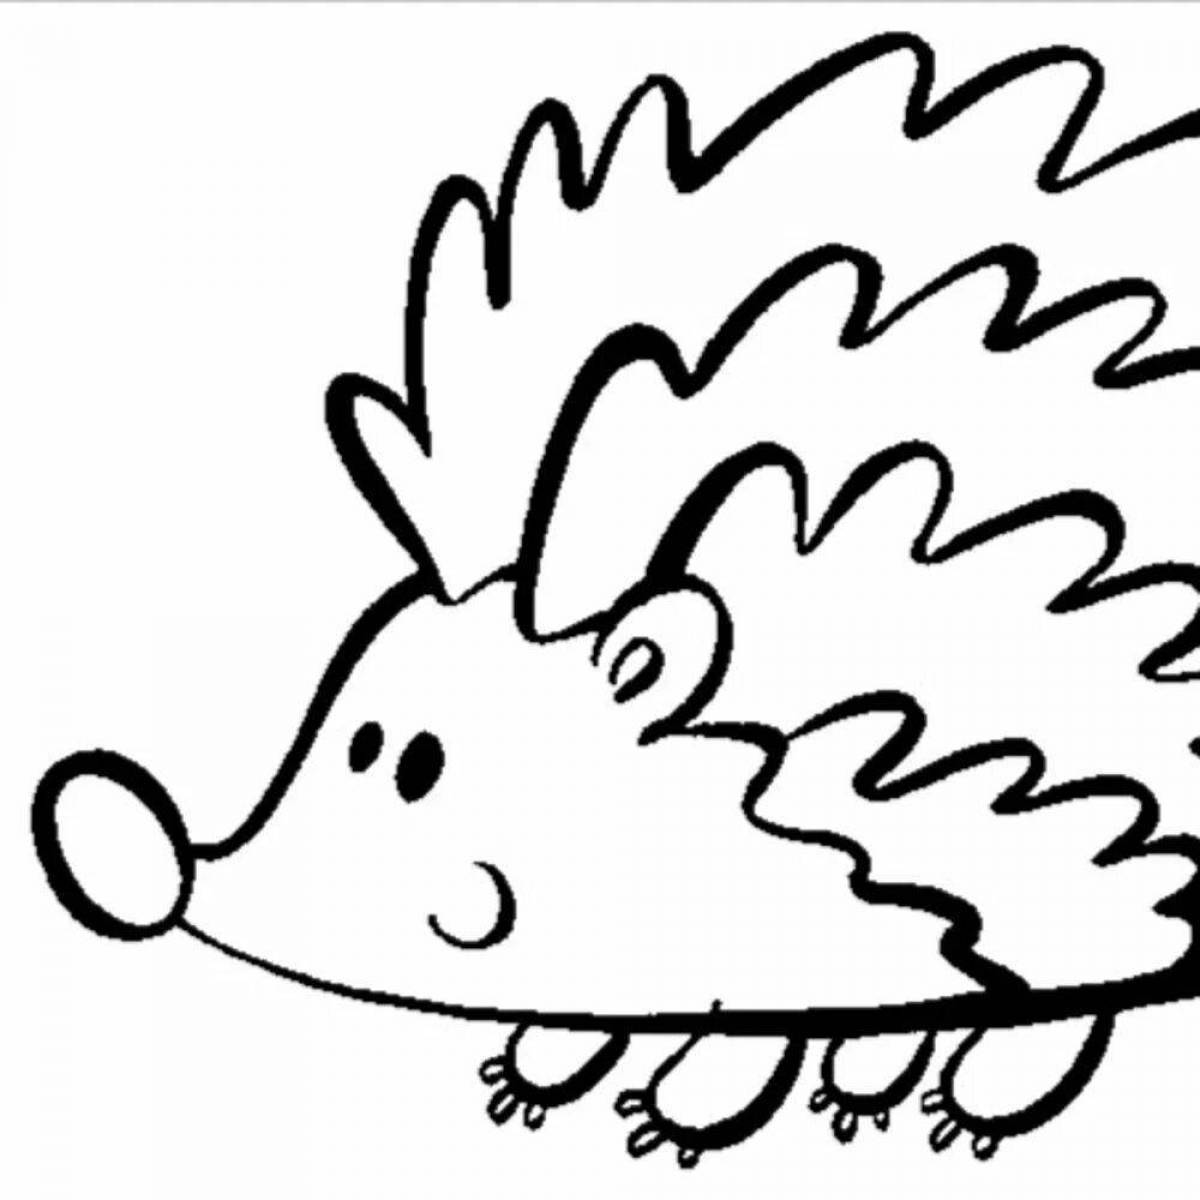 Crazy Hedgehog Coloring Page for Kids